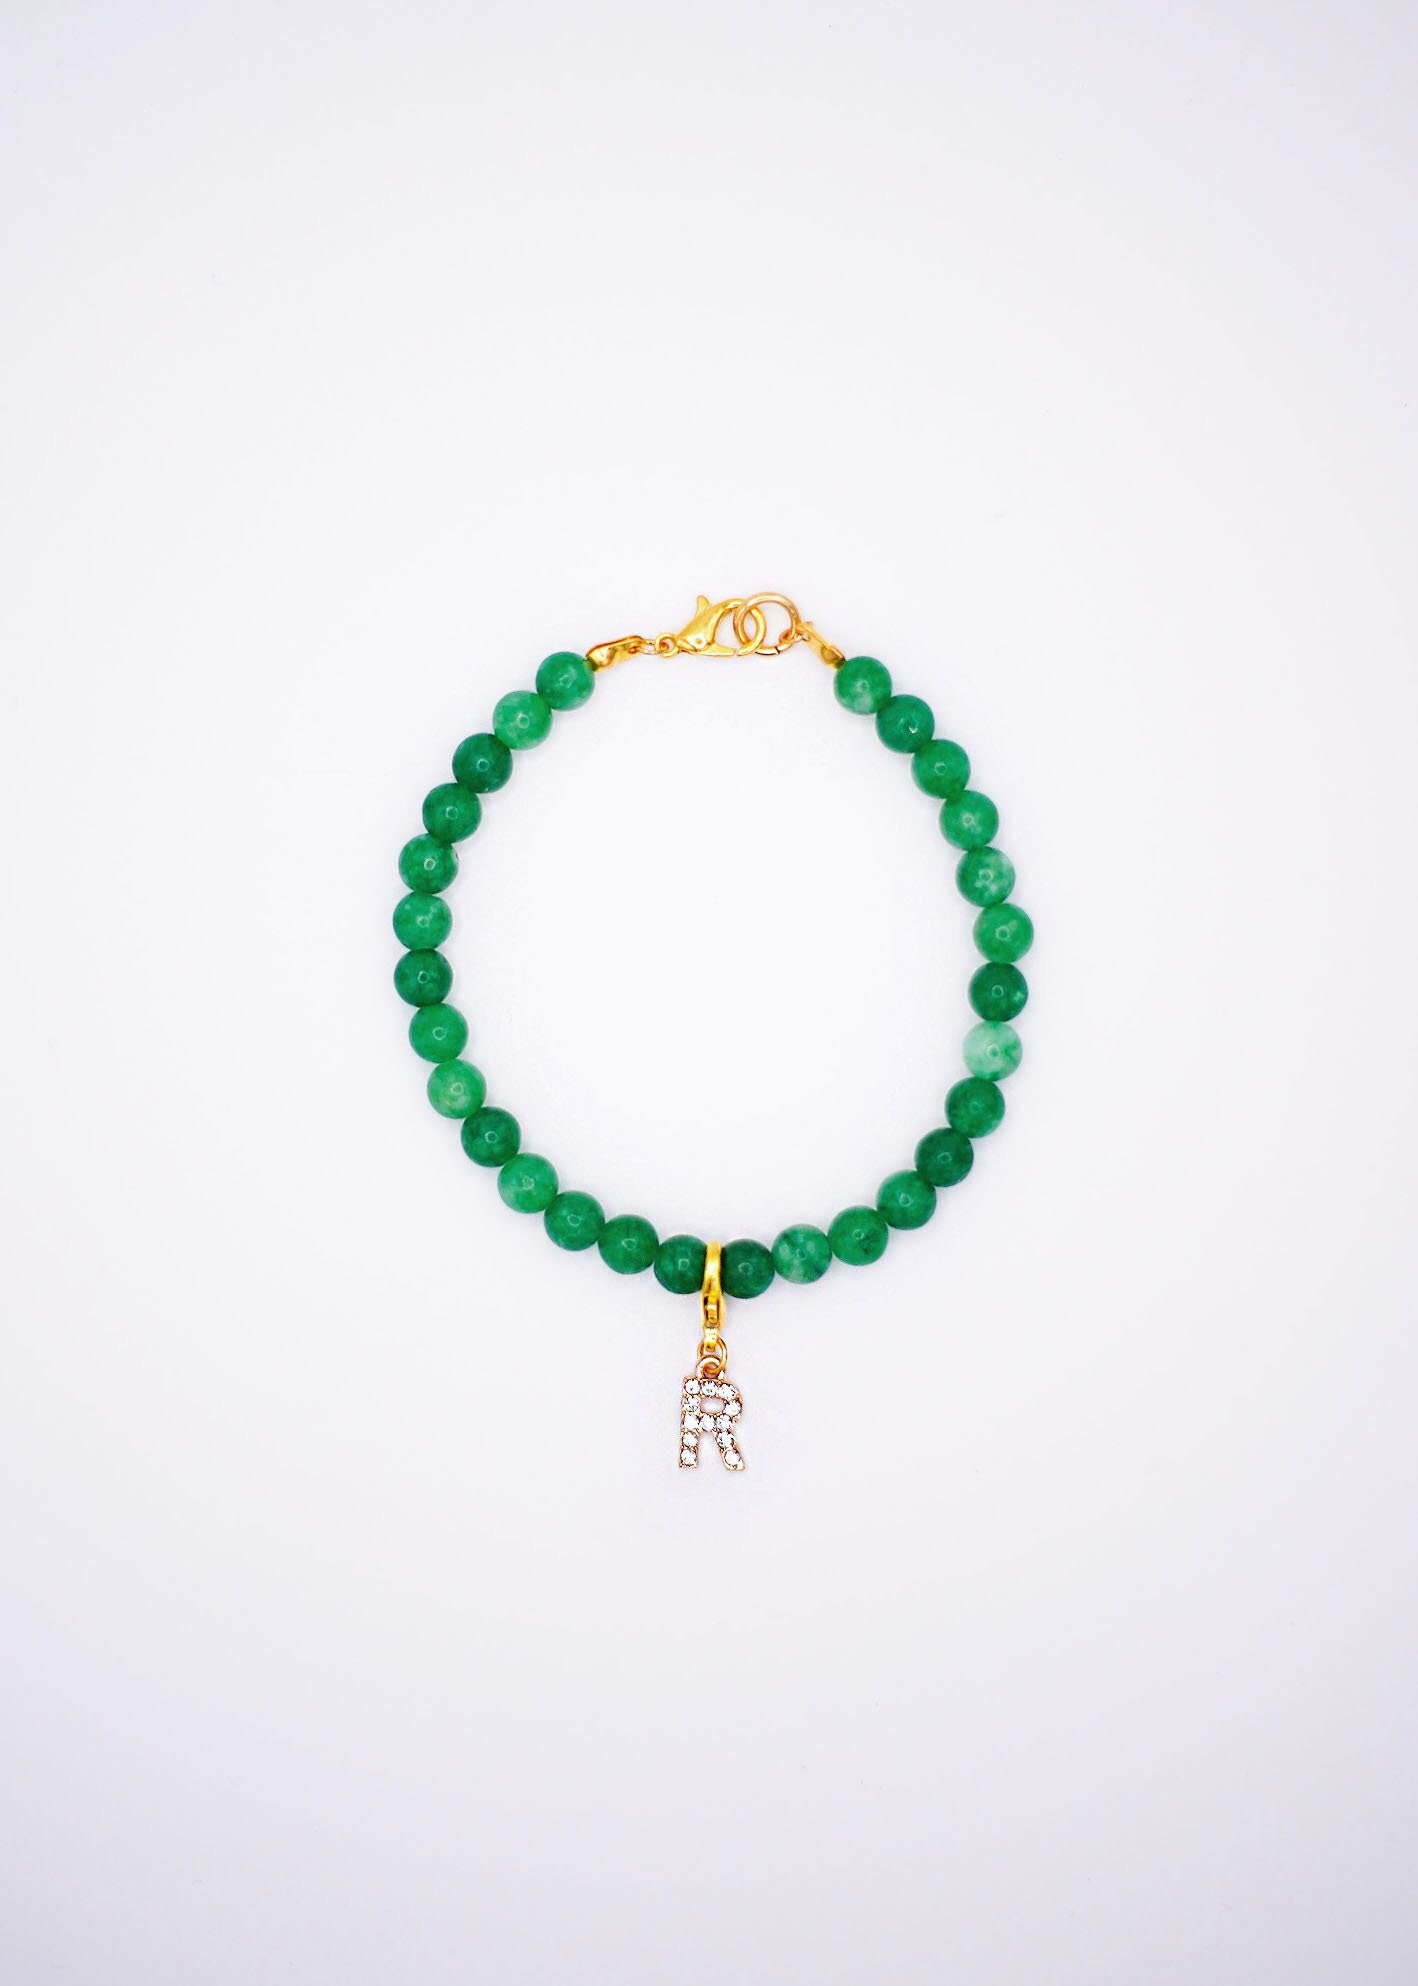 Men's Bracelet, Dark Green Jade and Gold Bracelet, Bracelet for Men, Men's Gold Beads Bracelet, Men's Bracelet, Jade Bracelet Men